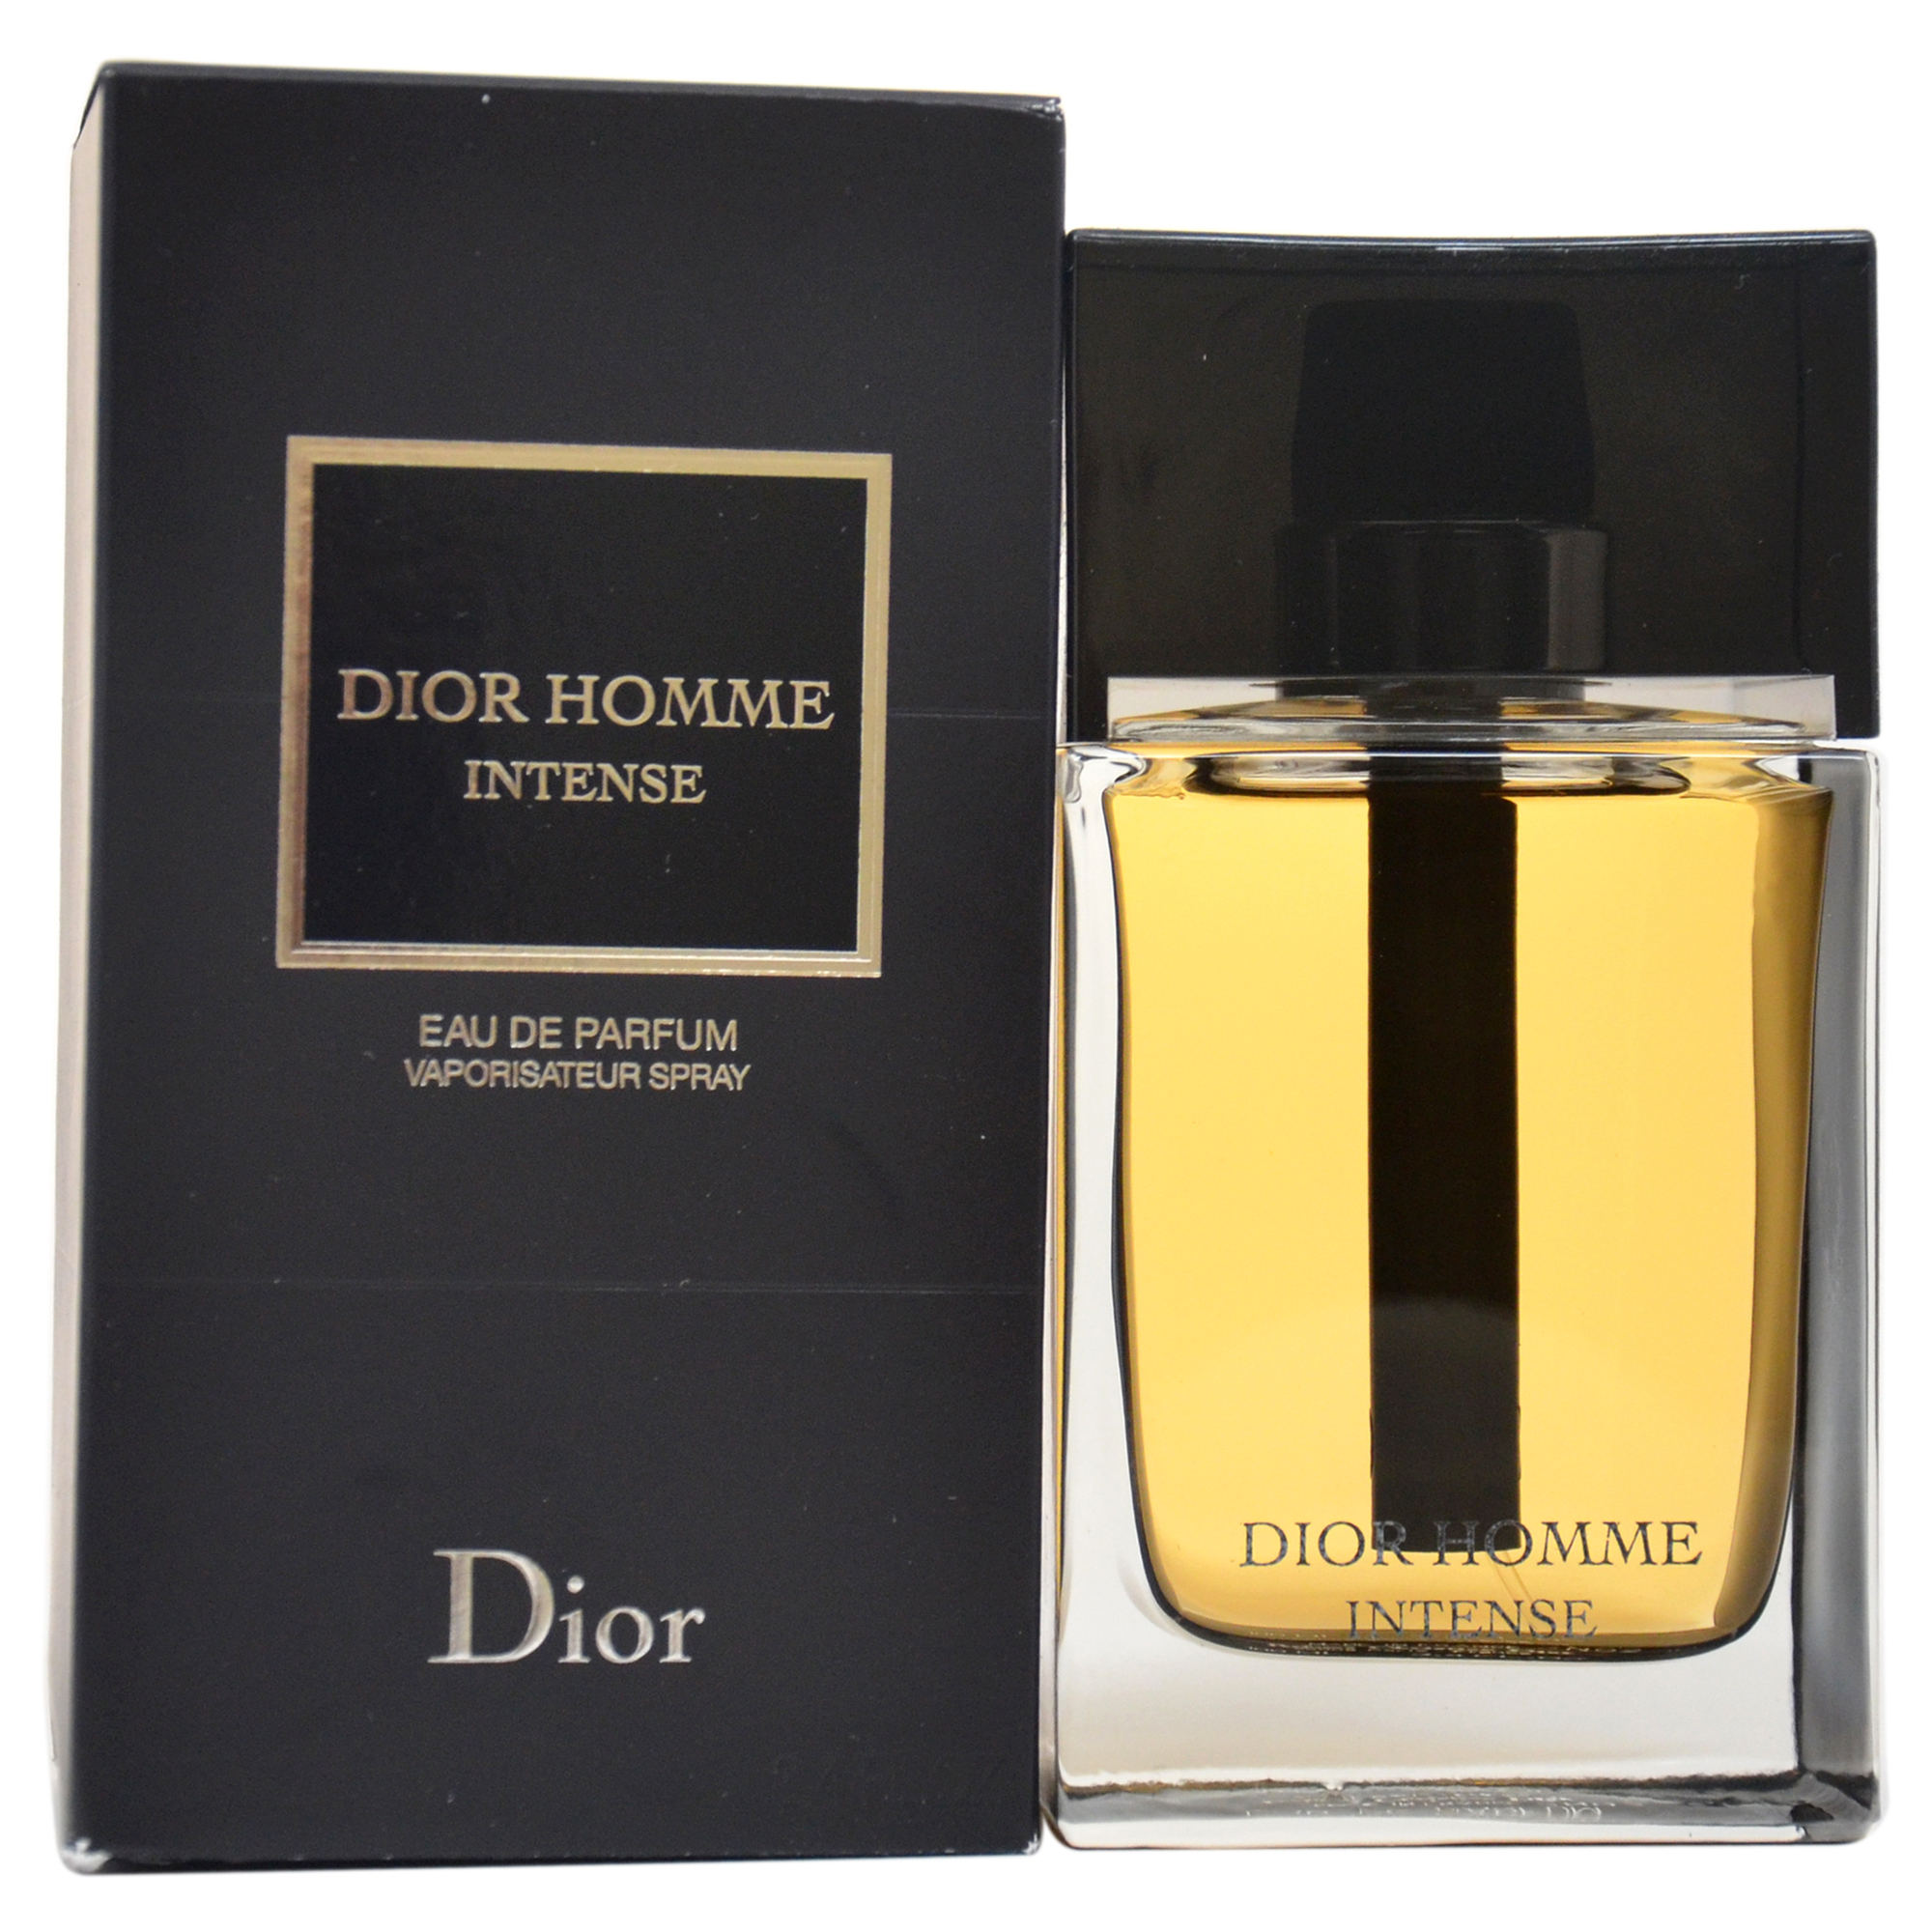 DIOR HOMME INTENSE by Christian Dior for Men - 3.4 oz EDP Spray